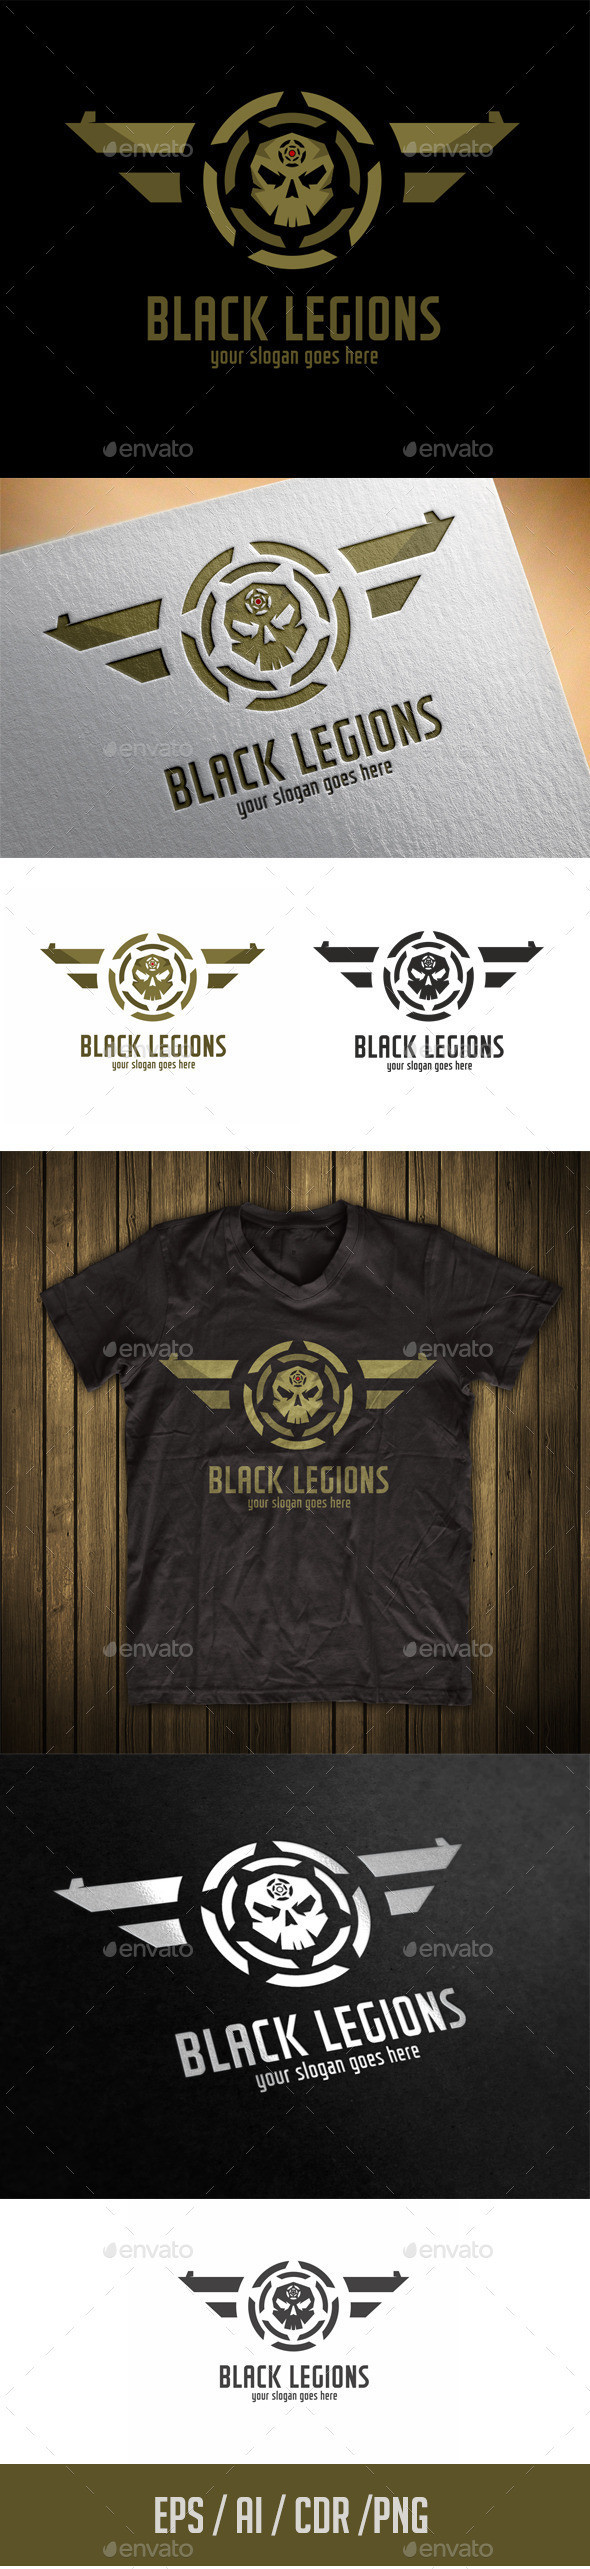 Black legions skull logo preview